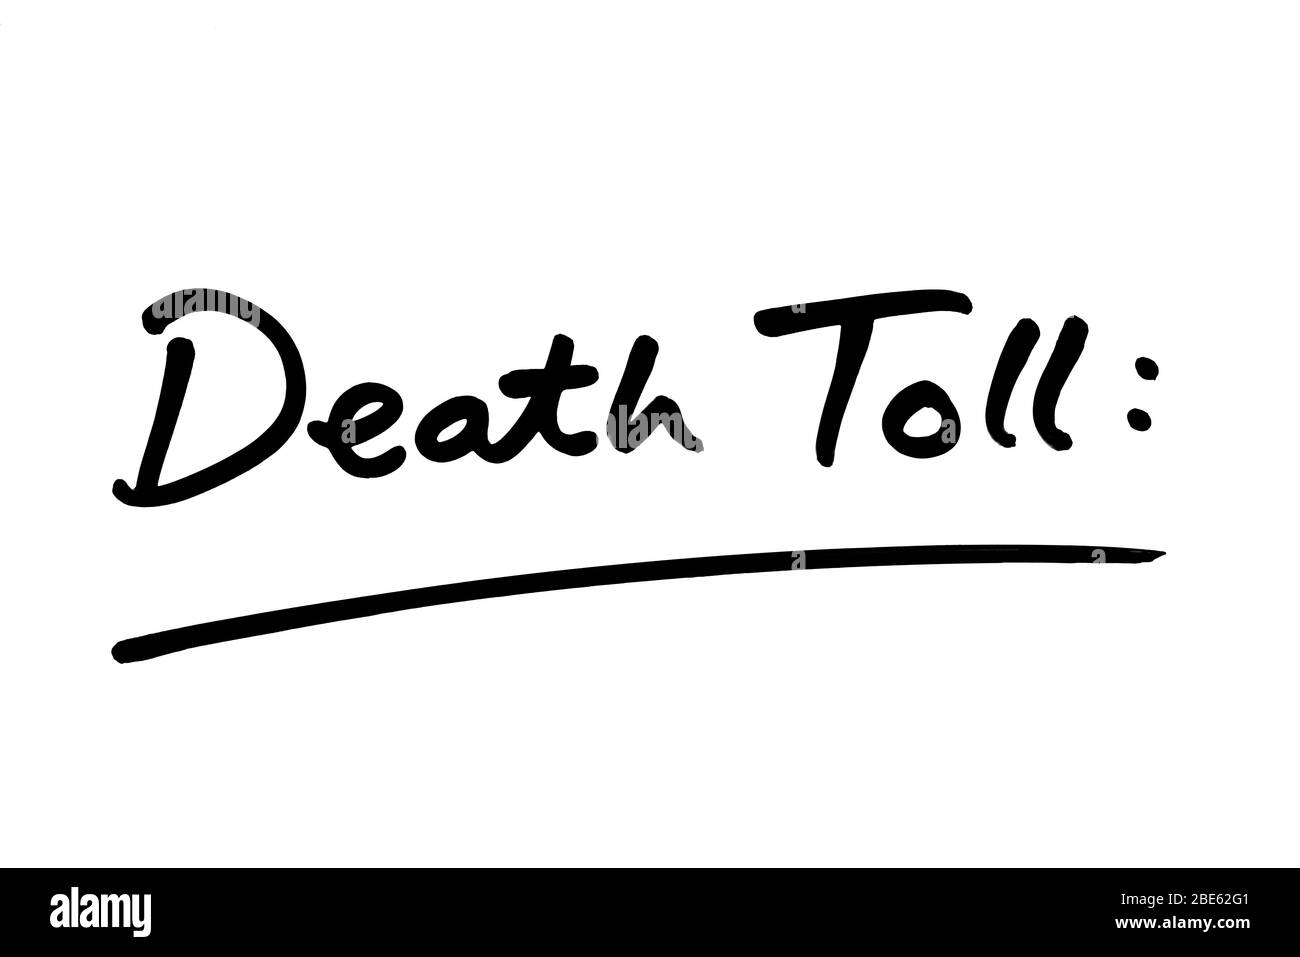 Death Toll handwritten on a white background. Stock Photo